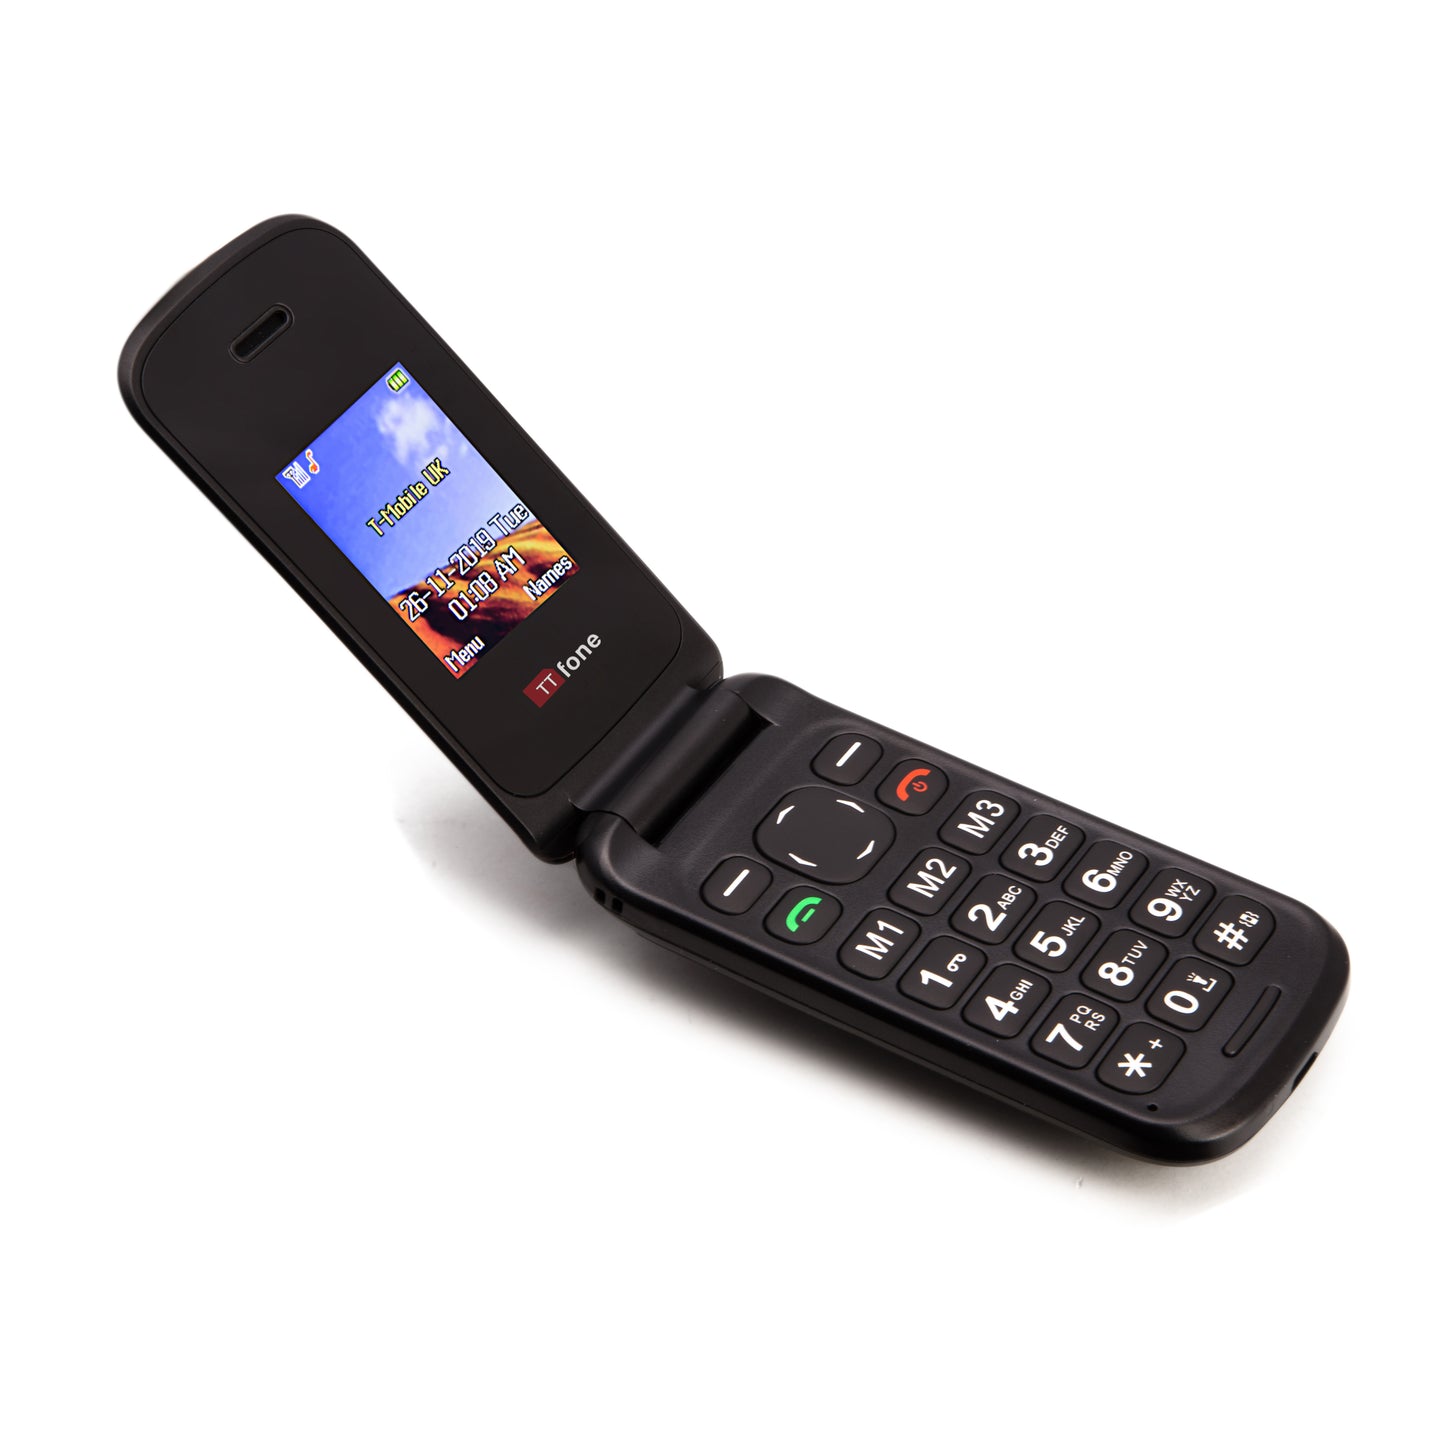 TTfone TT140 Black Flip Cheap Basic Simple Unlocked Mobile Phone with Mains Charger